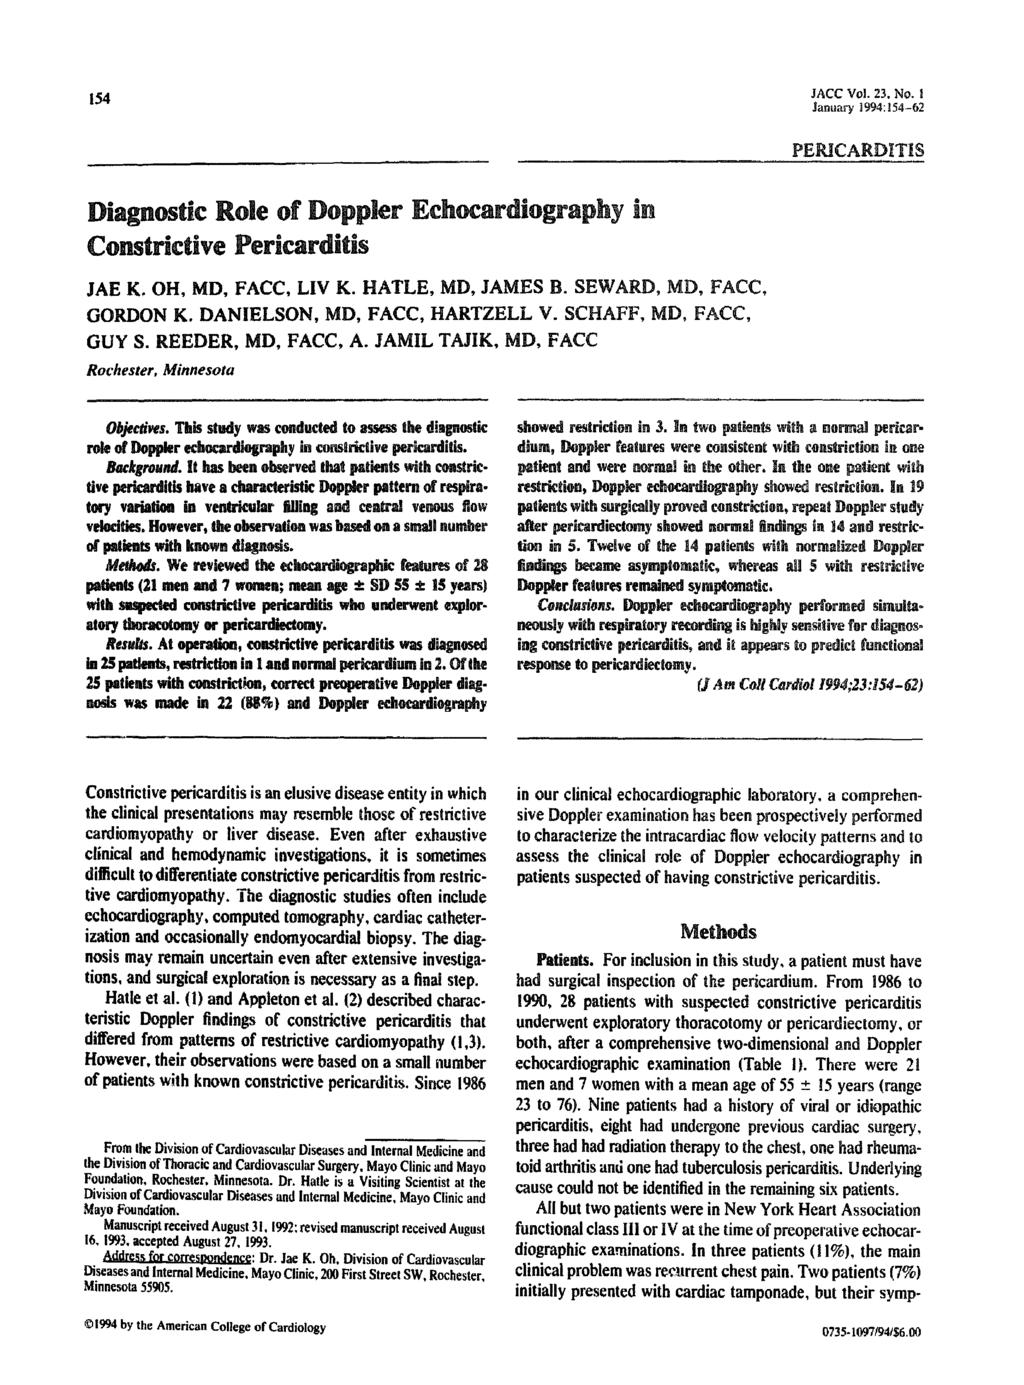 1 54 JACC Vol. 23. No. I PERICARDITIS Diagnostic Role of Doppler Echocardiography i Constrictive ericar itis JAE K. OH, MD, FACC, LIV K. HATLE, MD, JAMES B. SEWARD, MD, FACC, GORDON K.